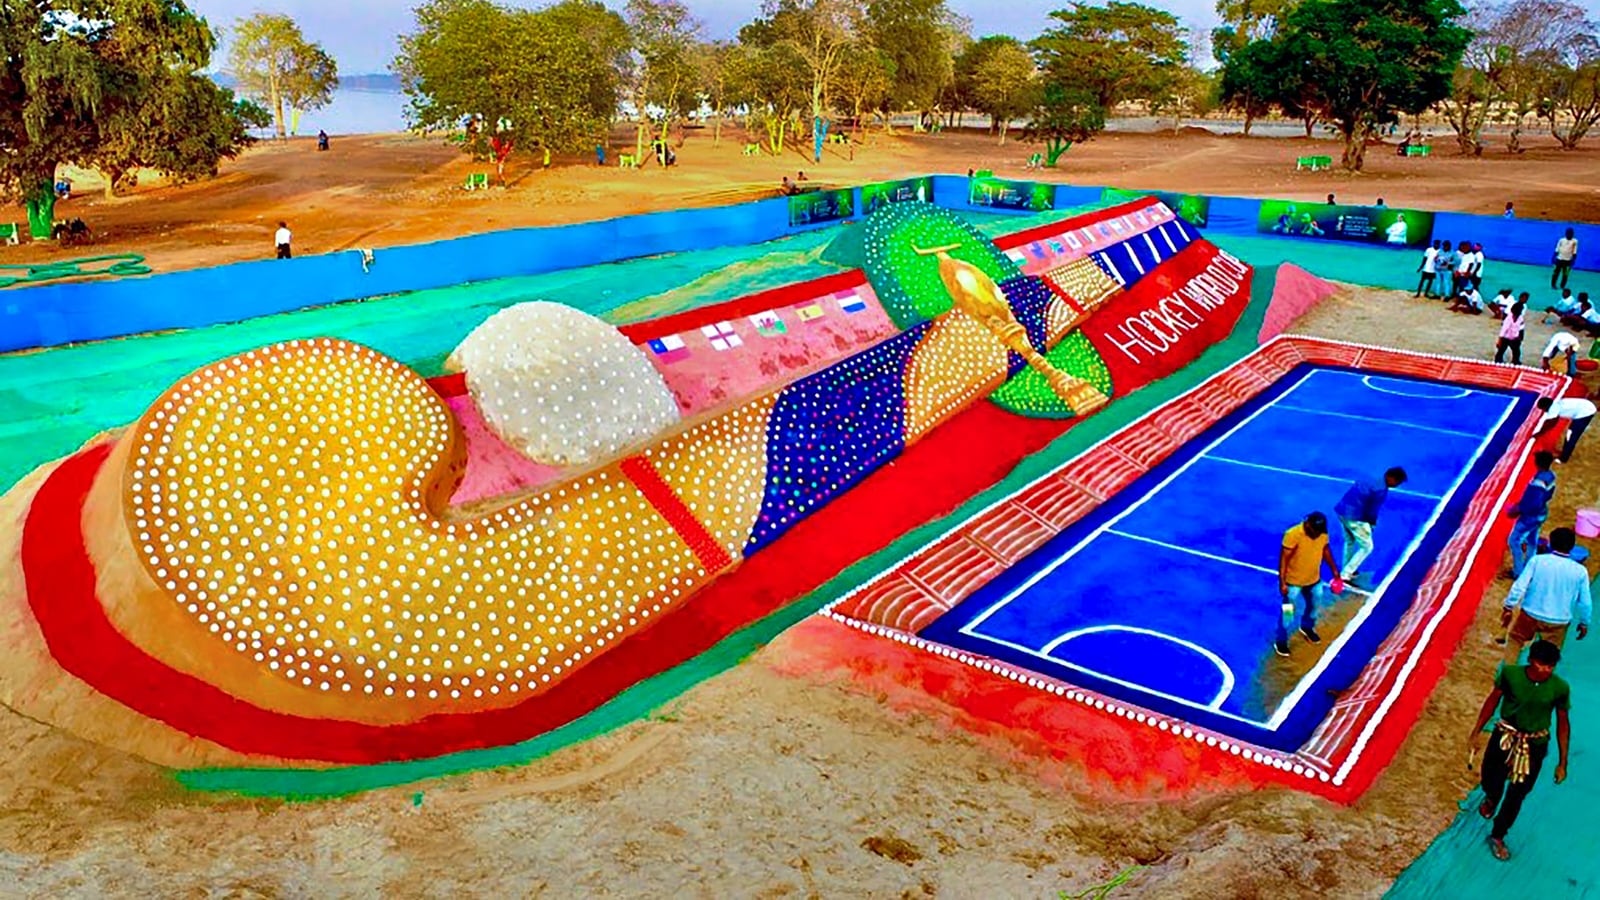 For Odisha hockey WC, 5ton sand sculpture, 'world's biggest' hockey